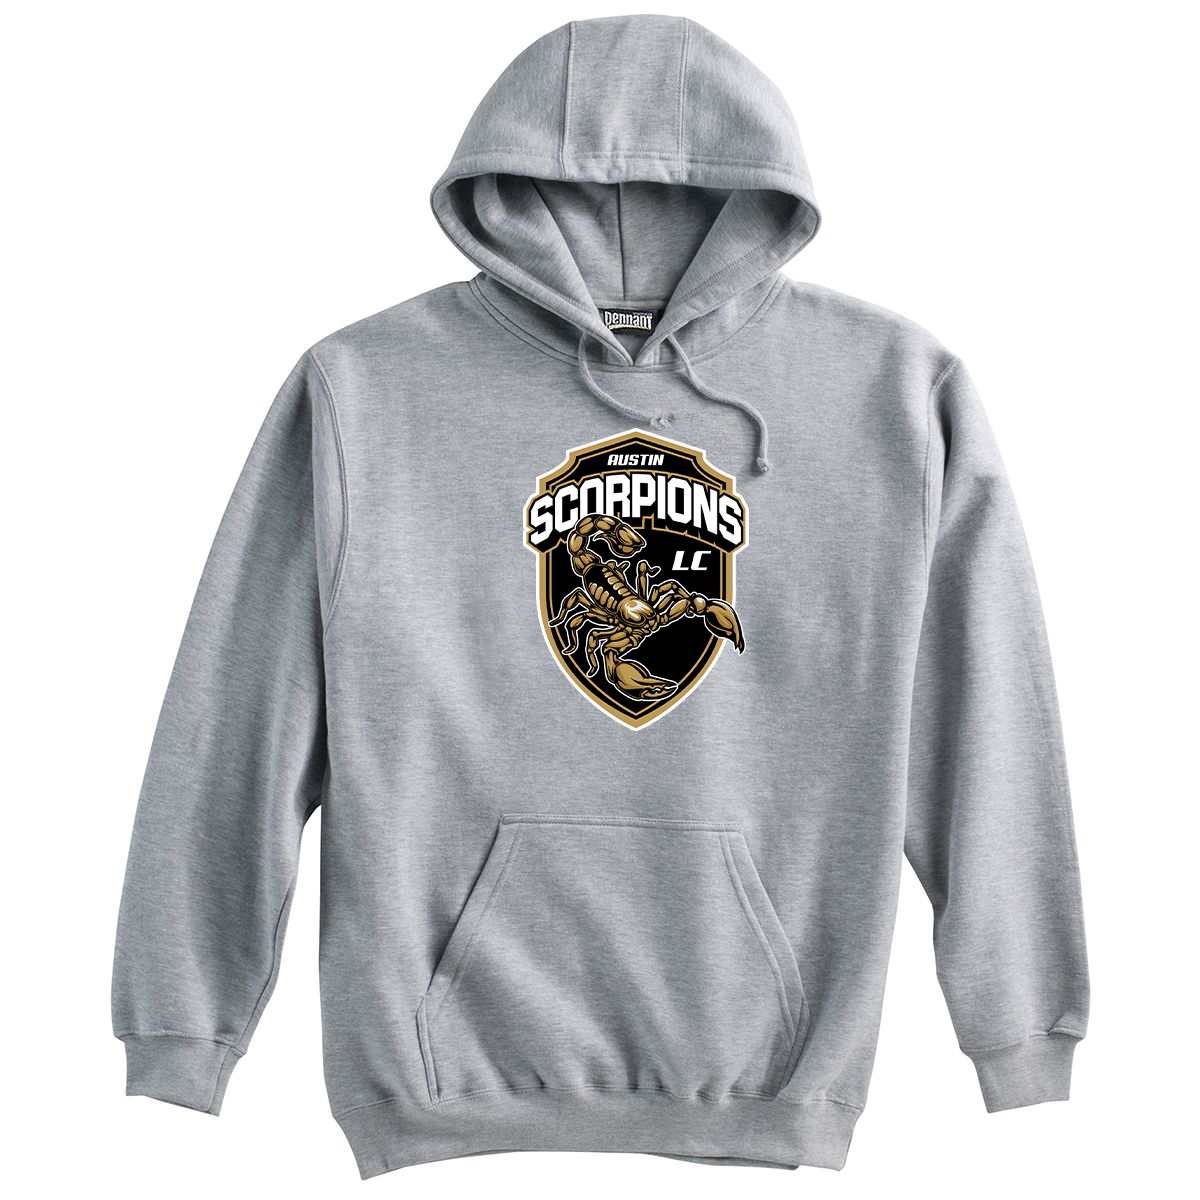 Austin Scorpions Lacrosse Club Sweatshirt